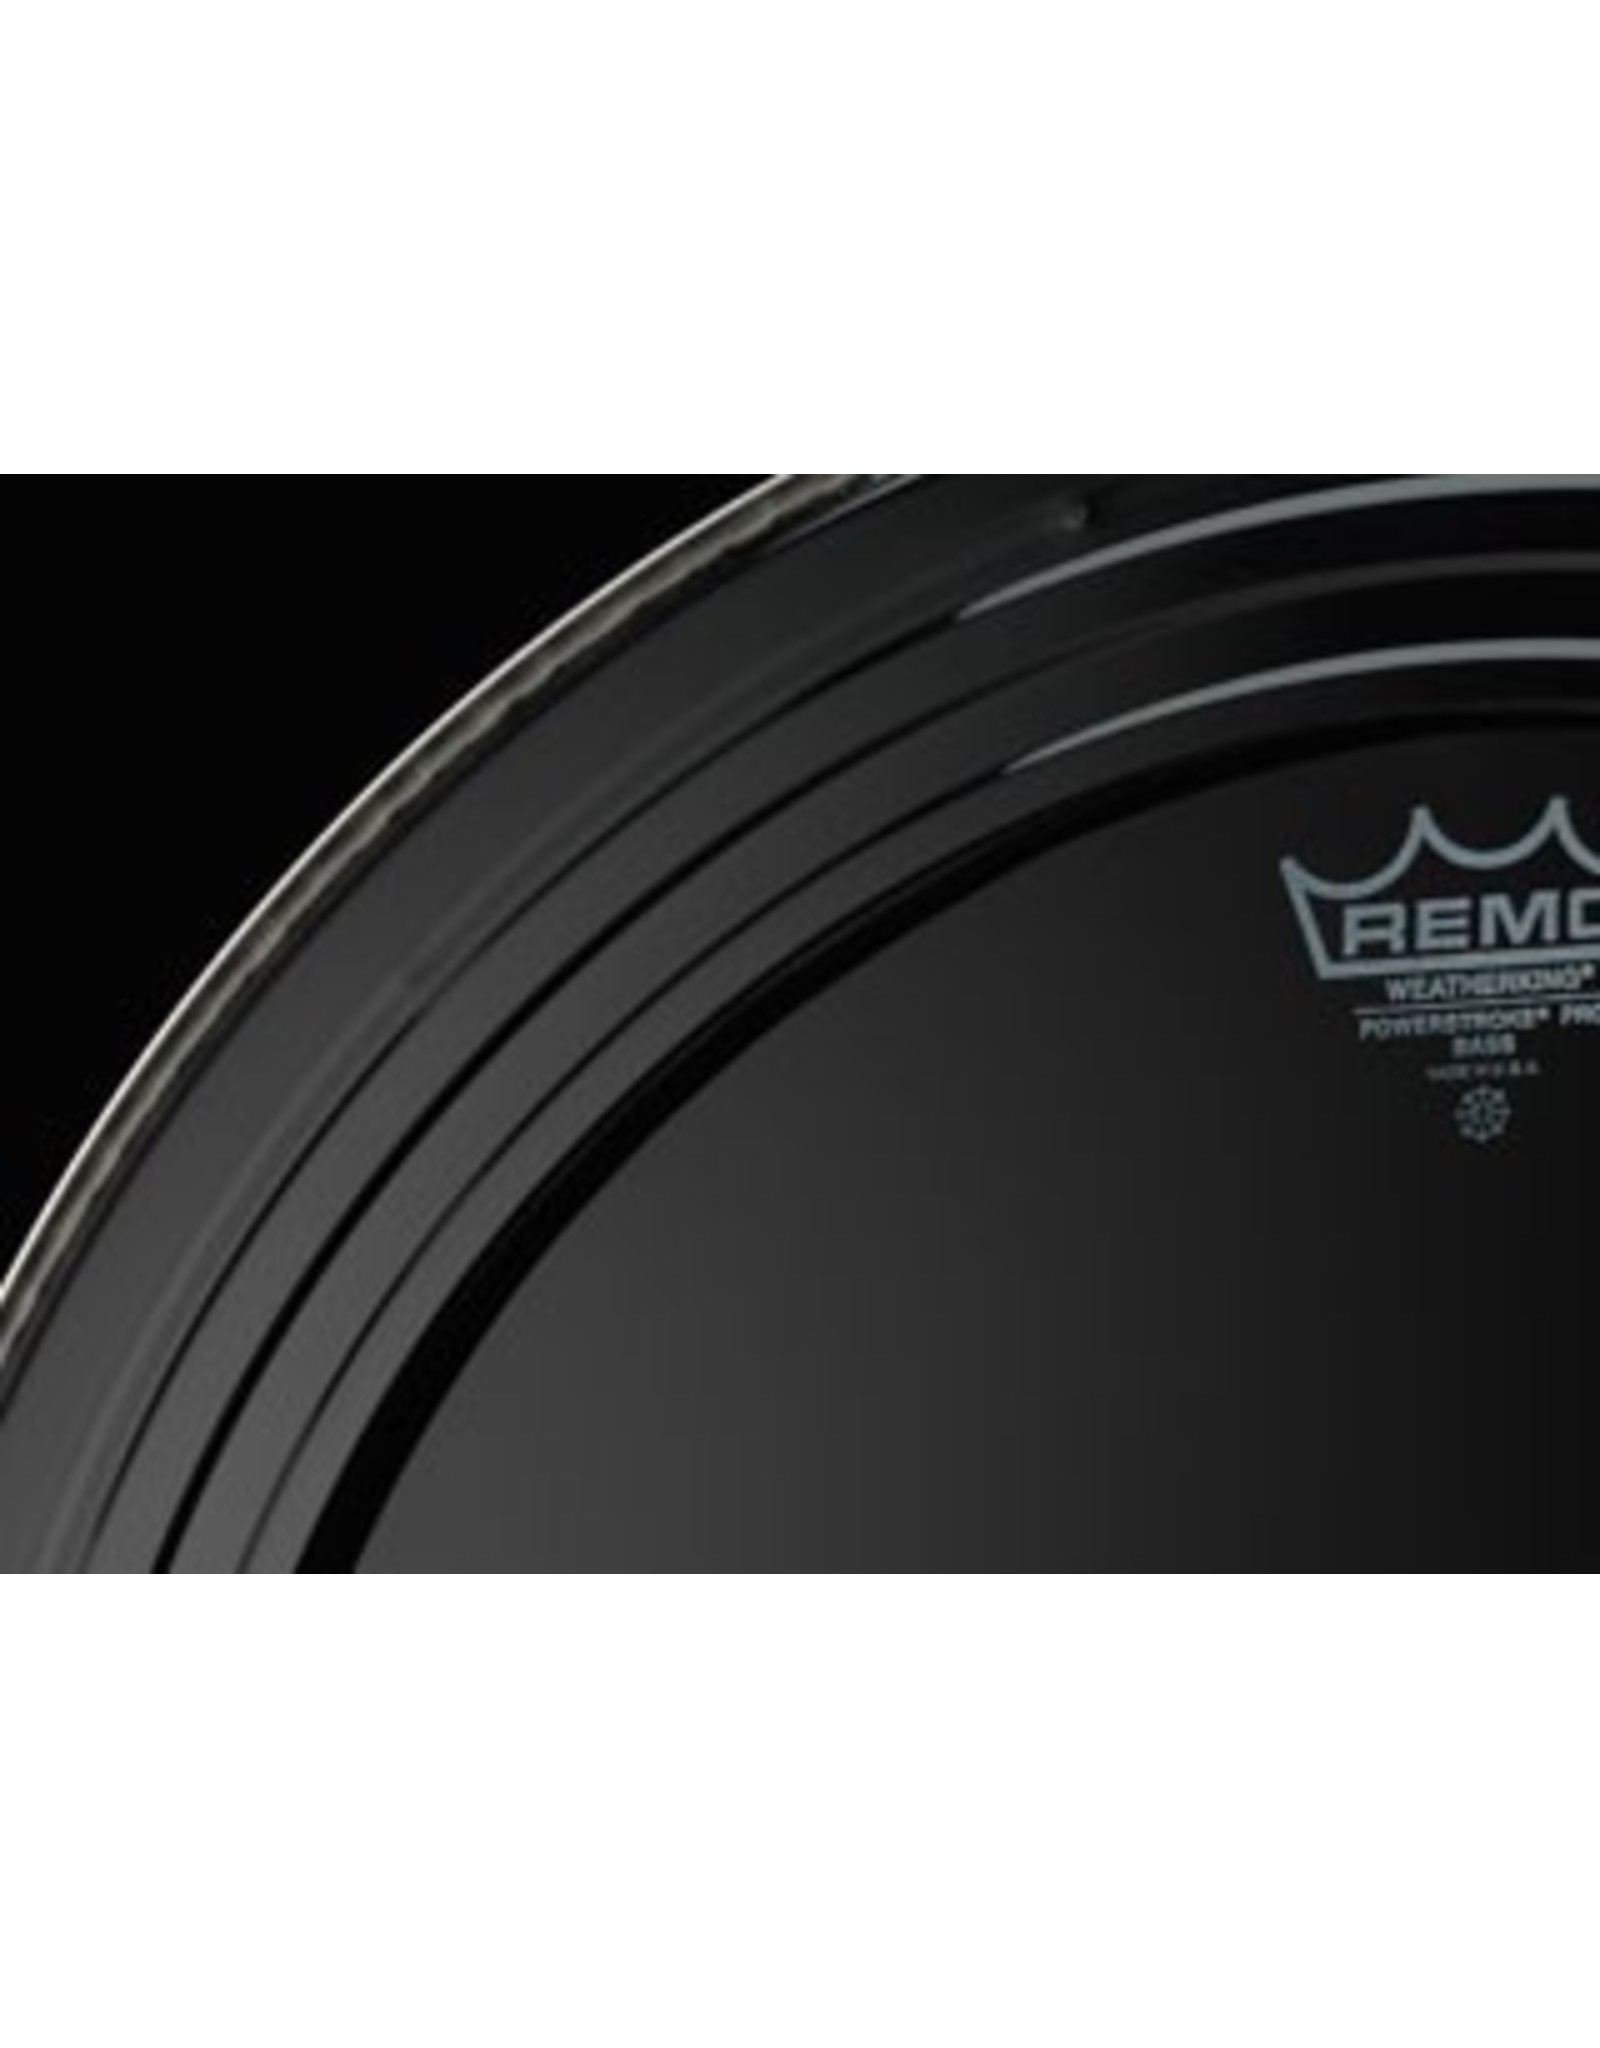 REMO  Powerstroke Pro PR-1124-00 Coated 24 inch bass drum skin